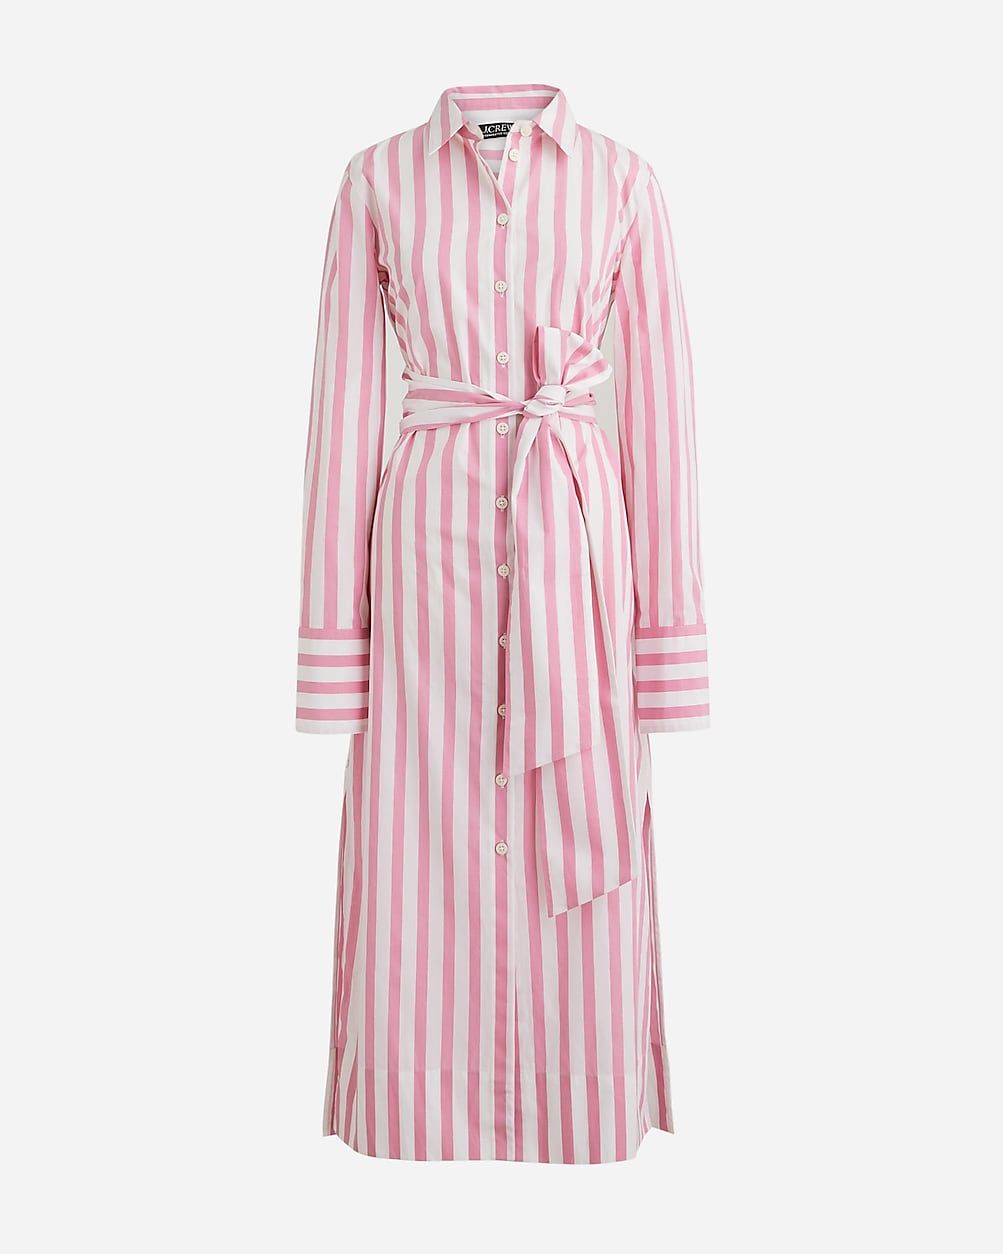 Long-sleeve button-up shirtdress in pink striped poplin | J.Crew US